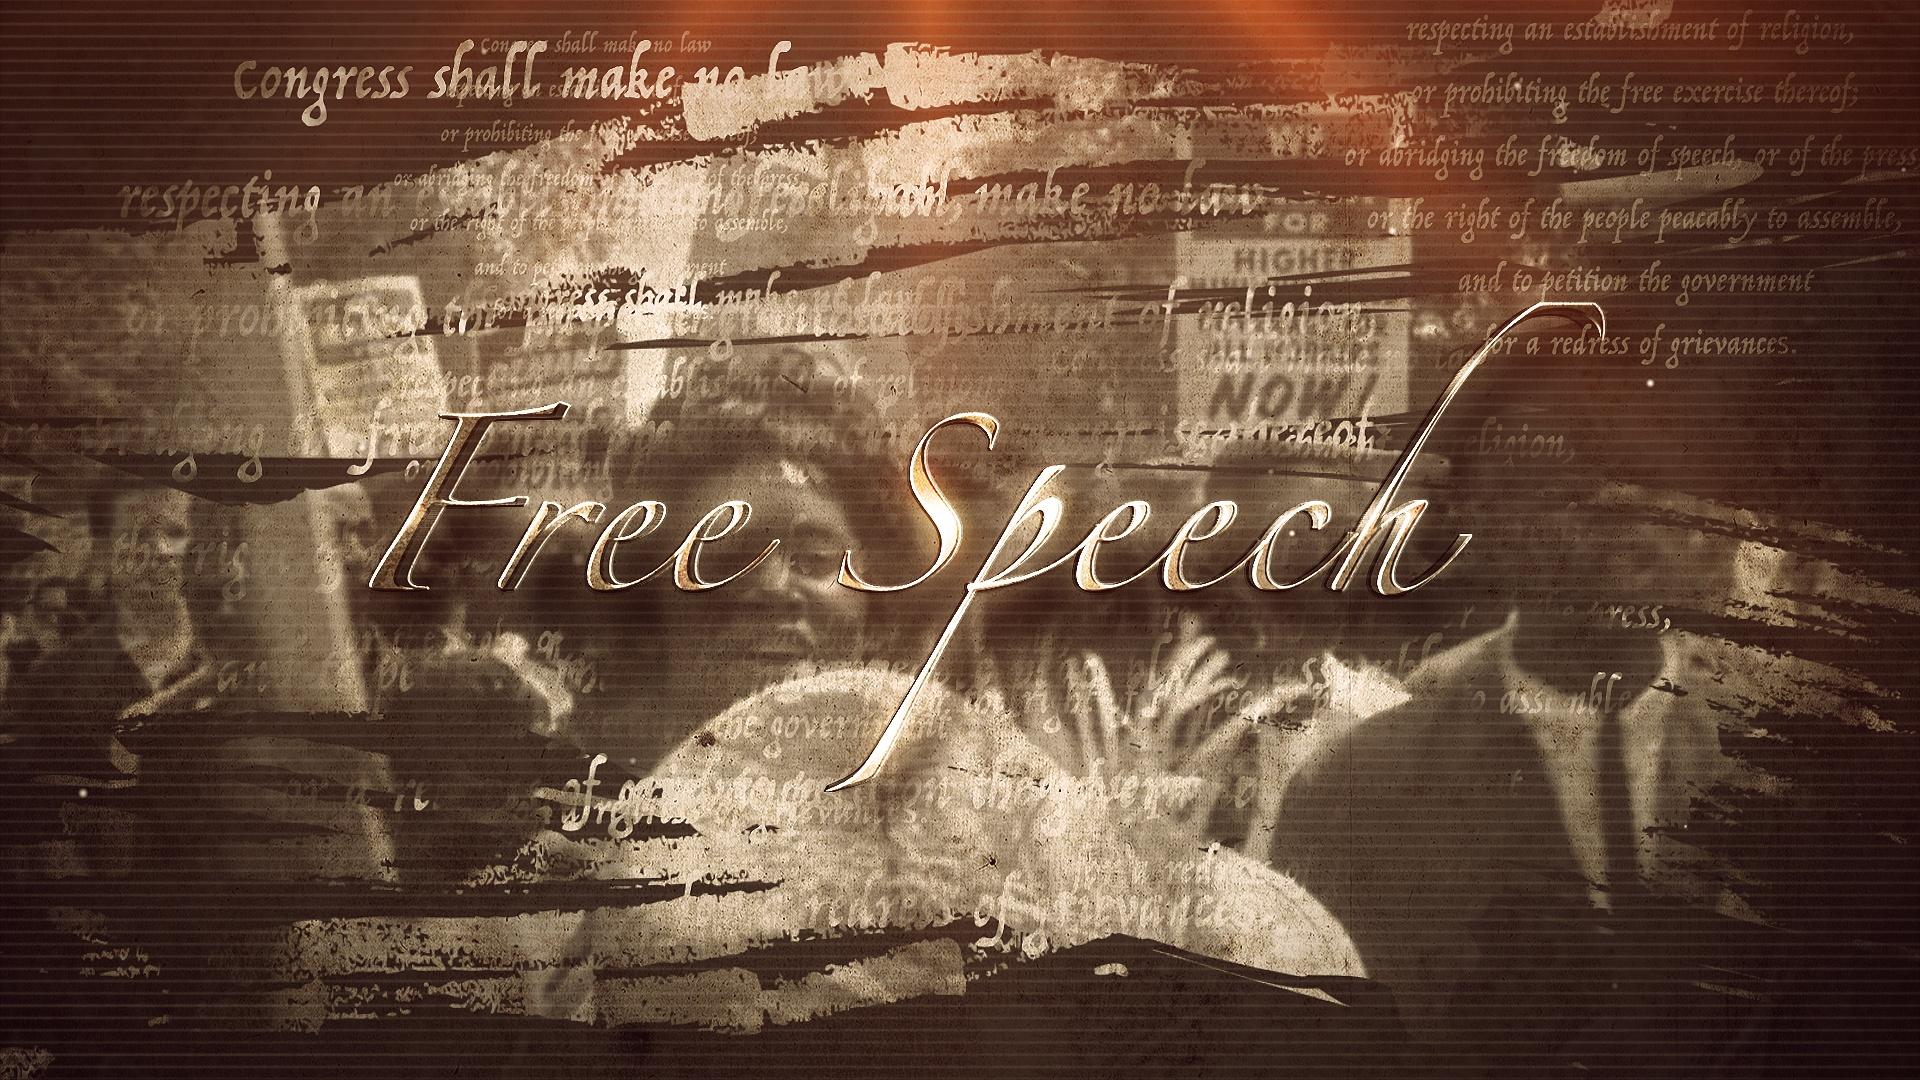 Louis Brandeis - The Free Speech Center